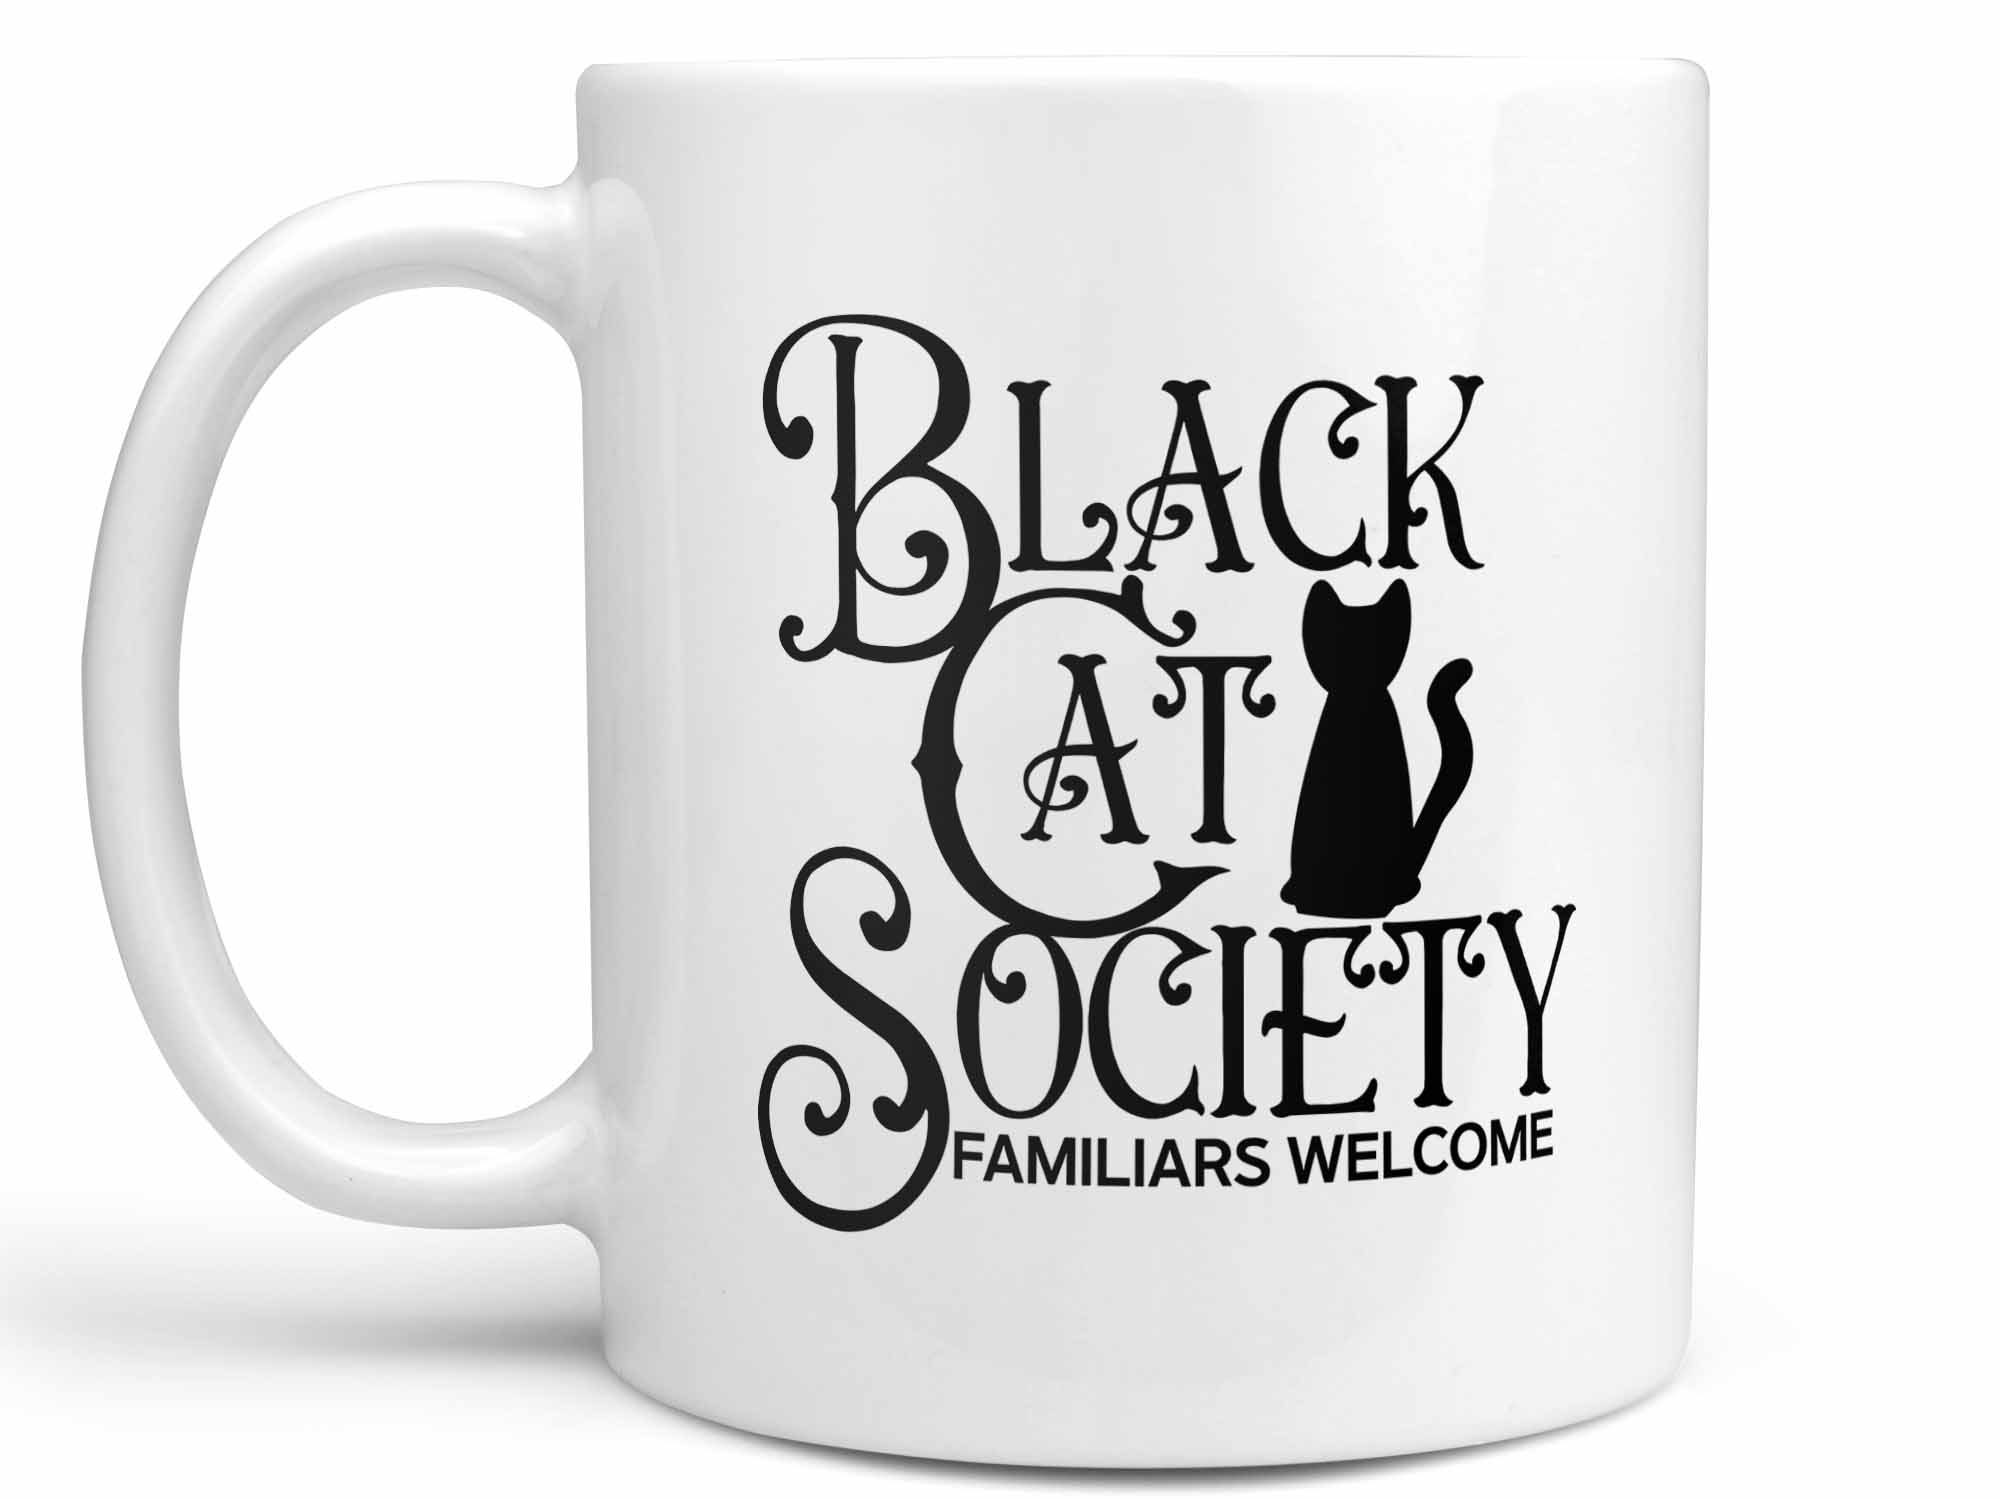 Black Cat Society Coffee Mug